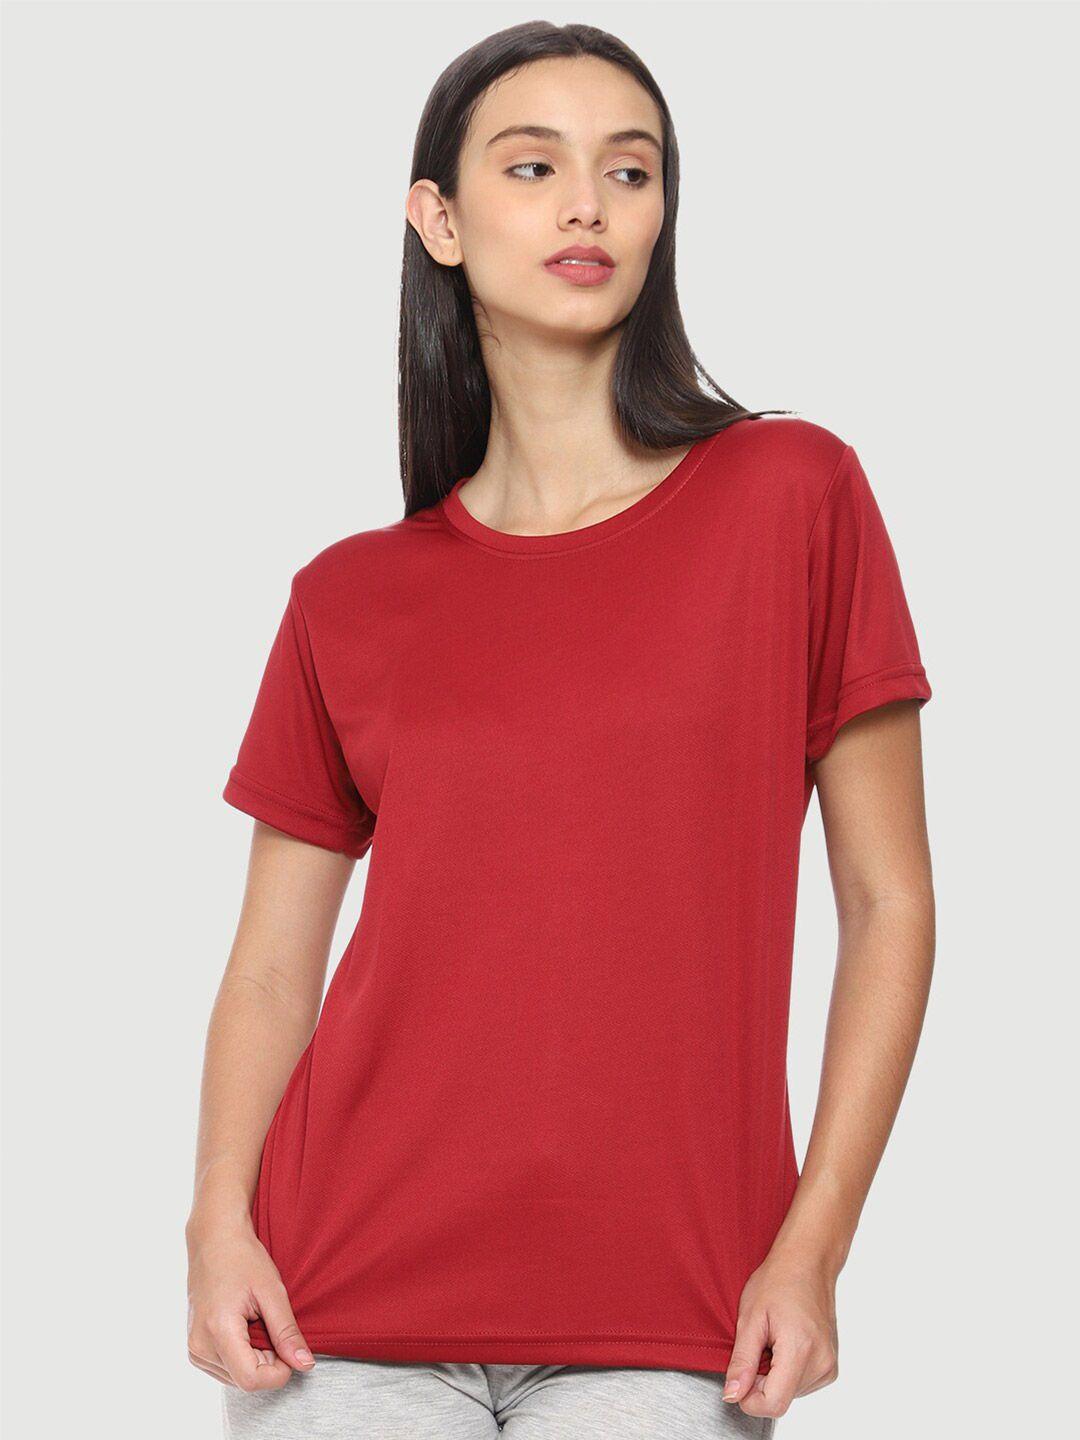 urban komfort women red extended sleeves t-shirt